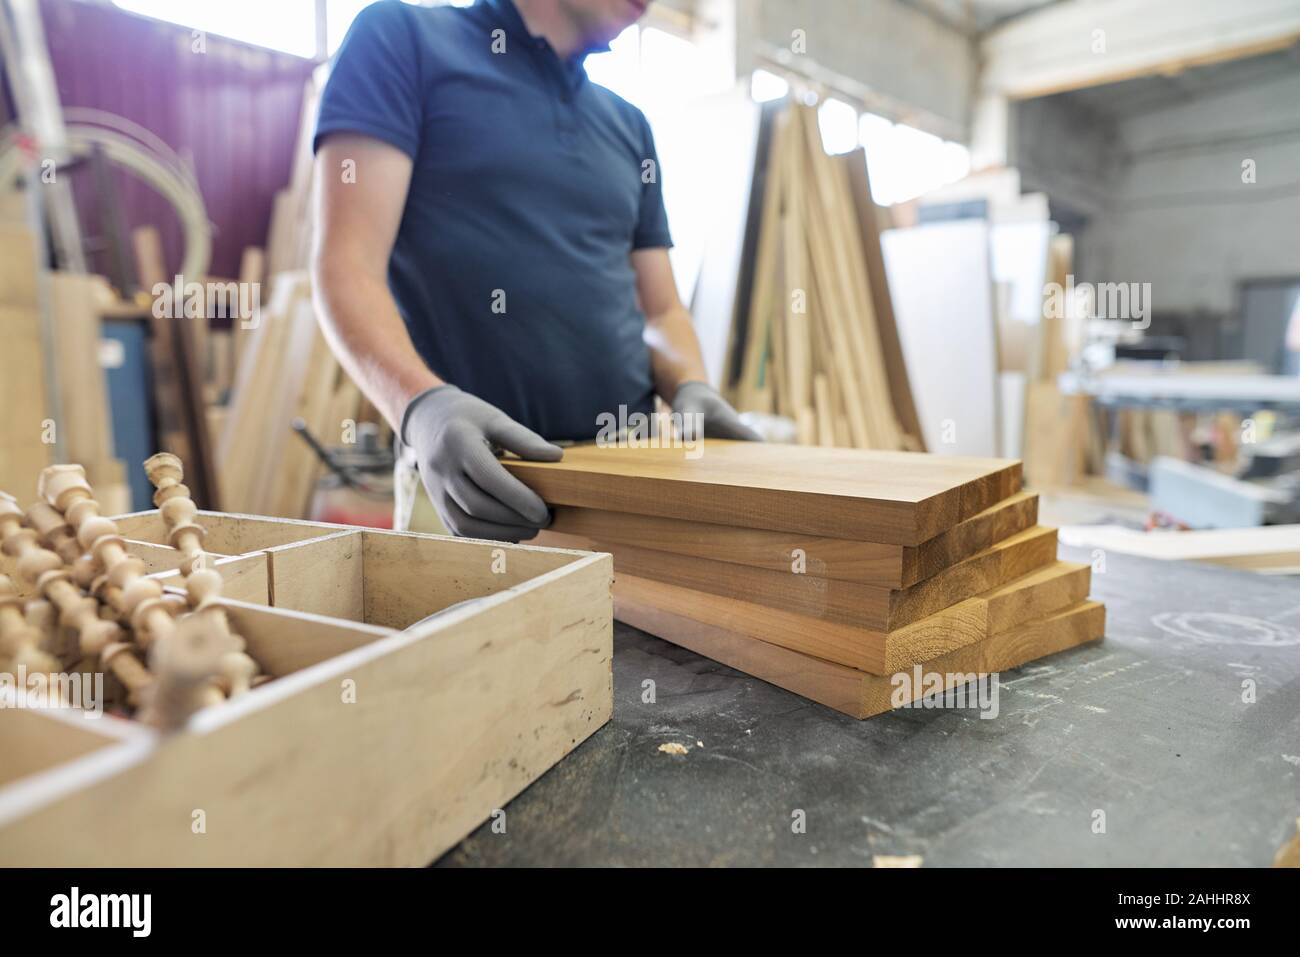 Carpentry workshop making wooden furniture. Wooden details in hands of male carpenter, woodworking industry, individual orders, designer furniture Stock Photo